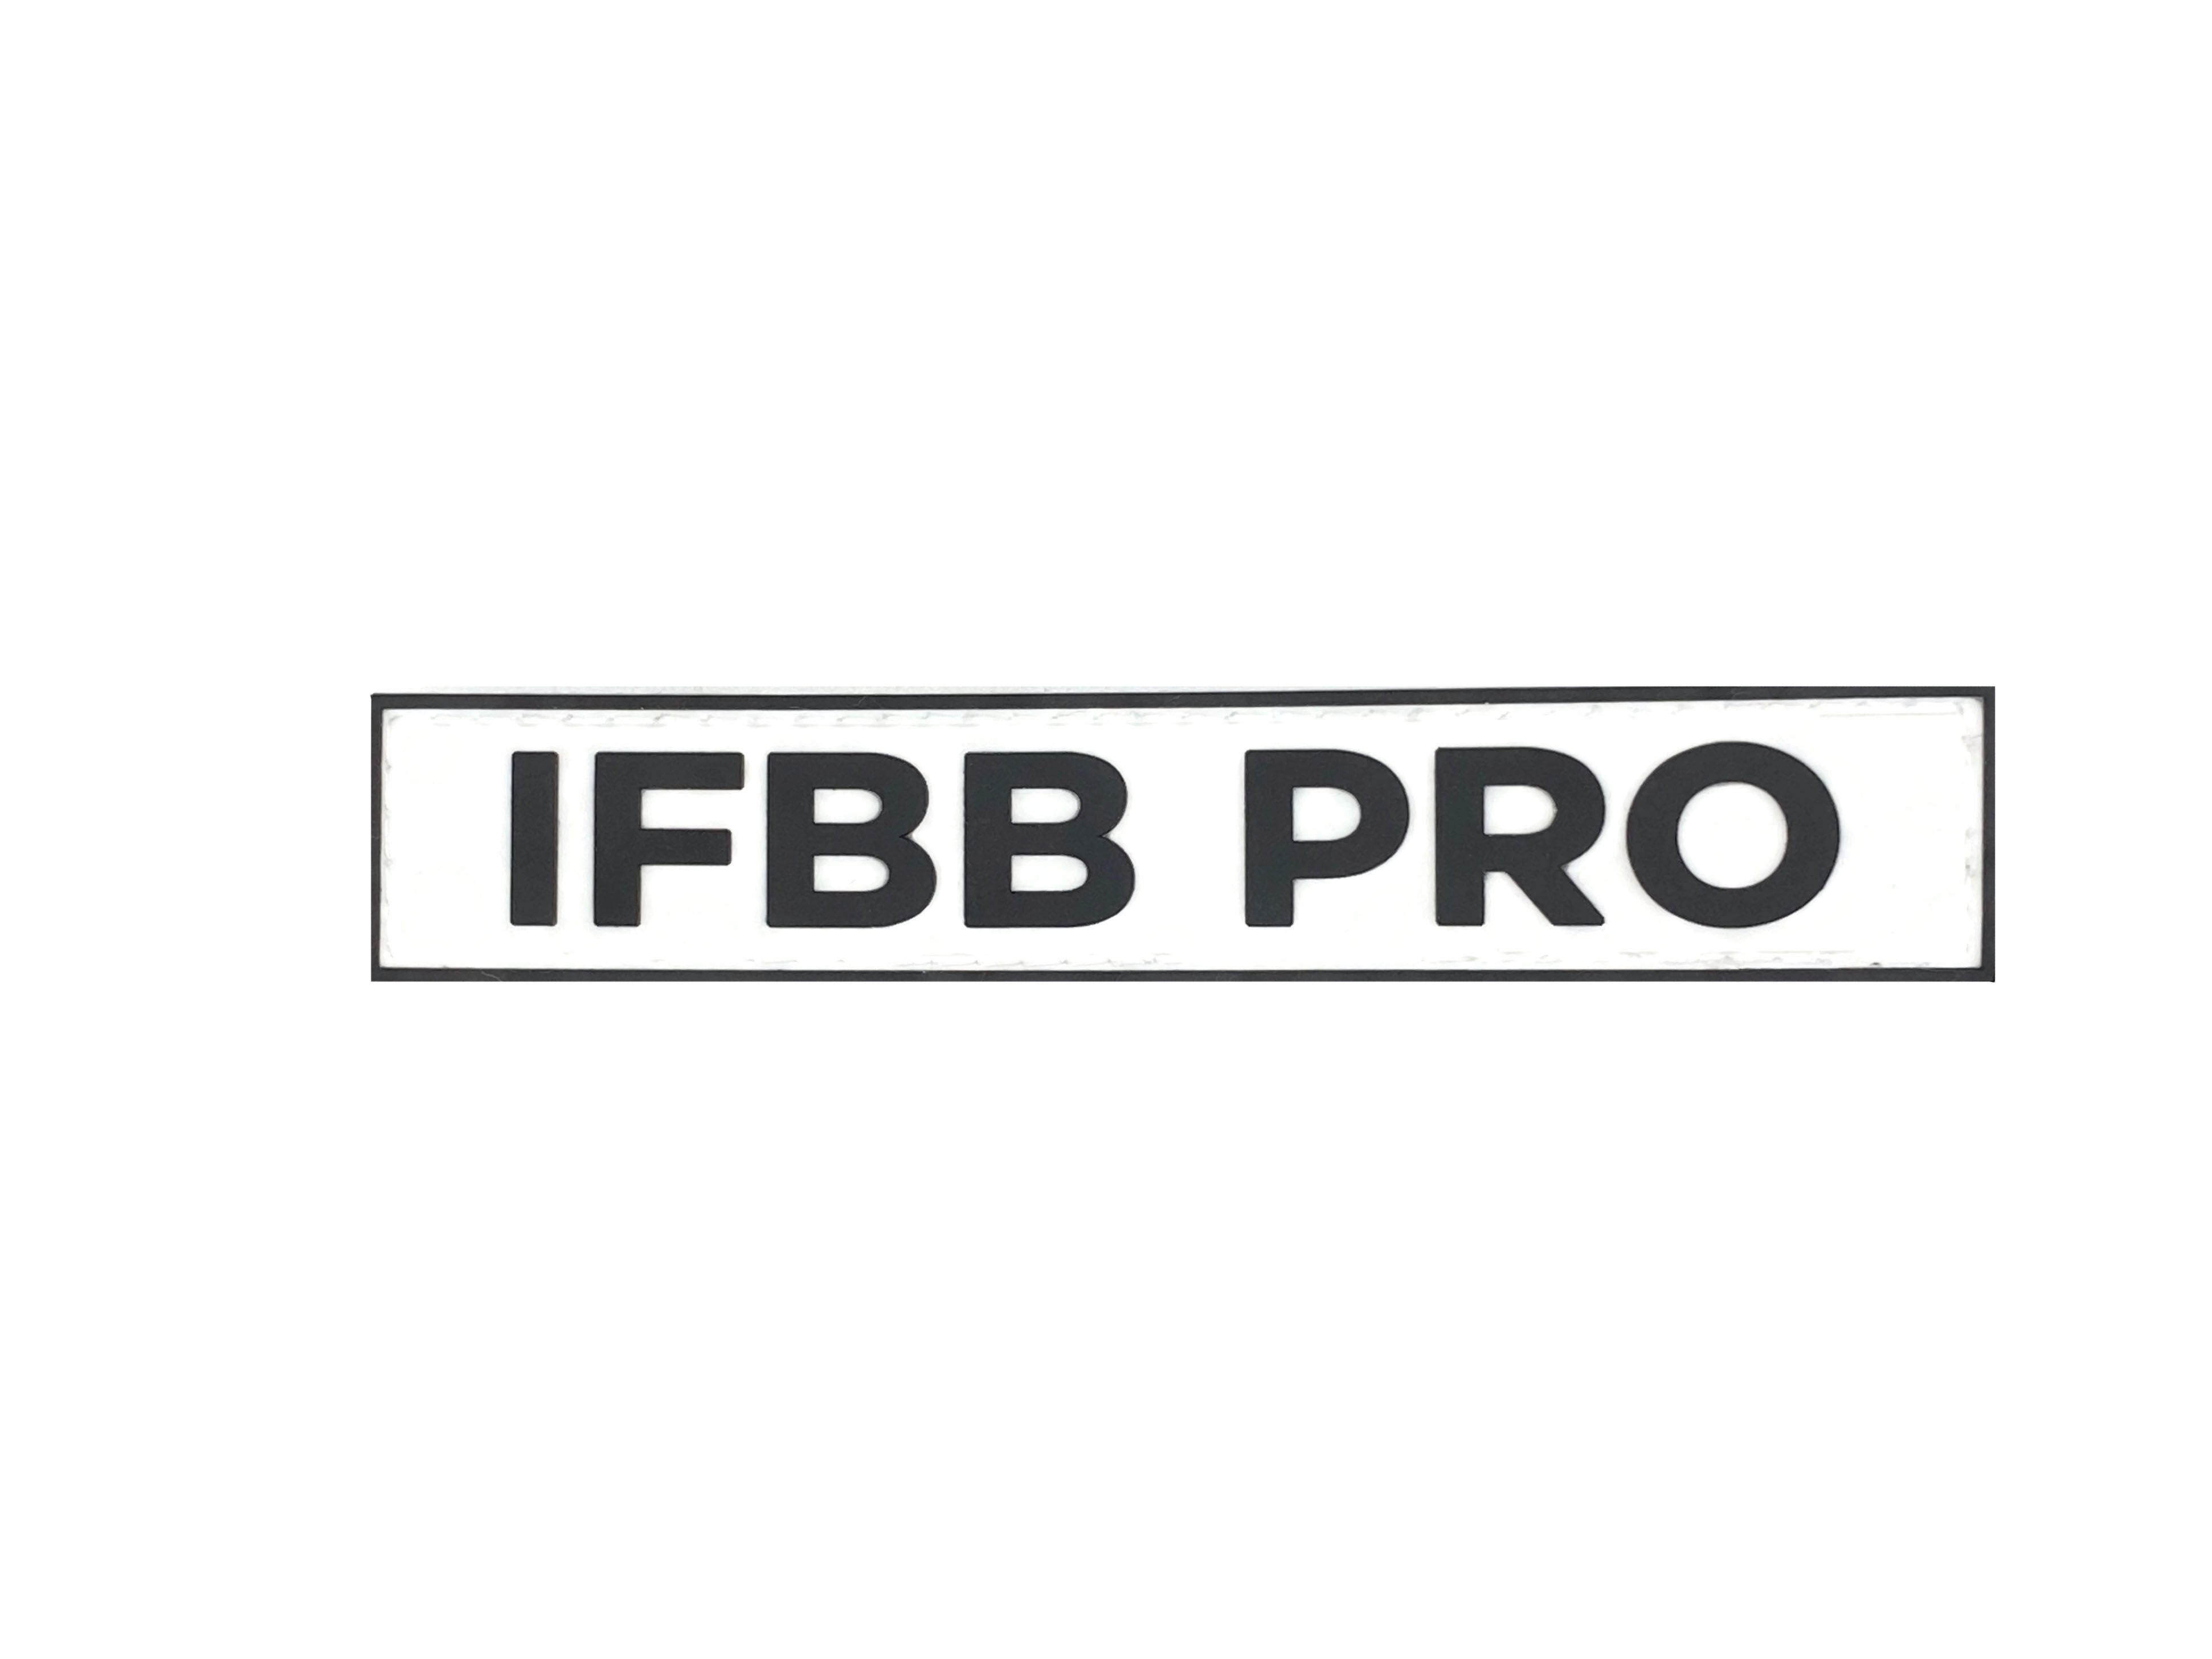 IFBB PRO Thin